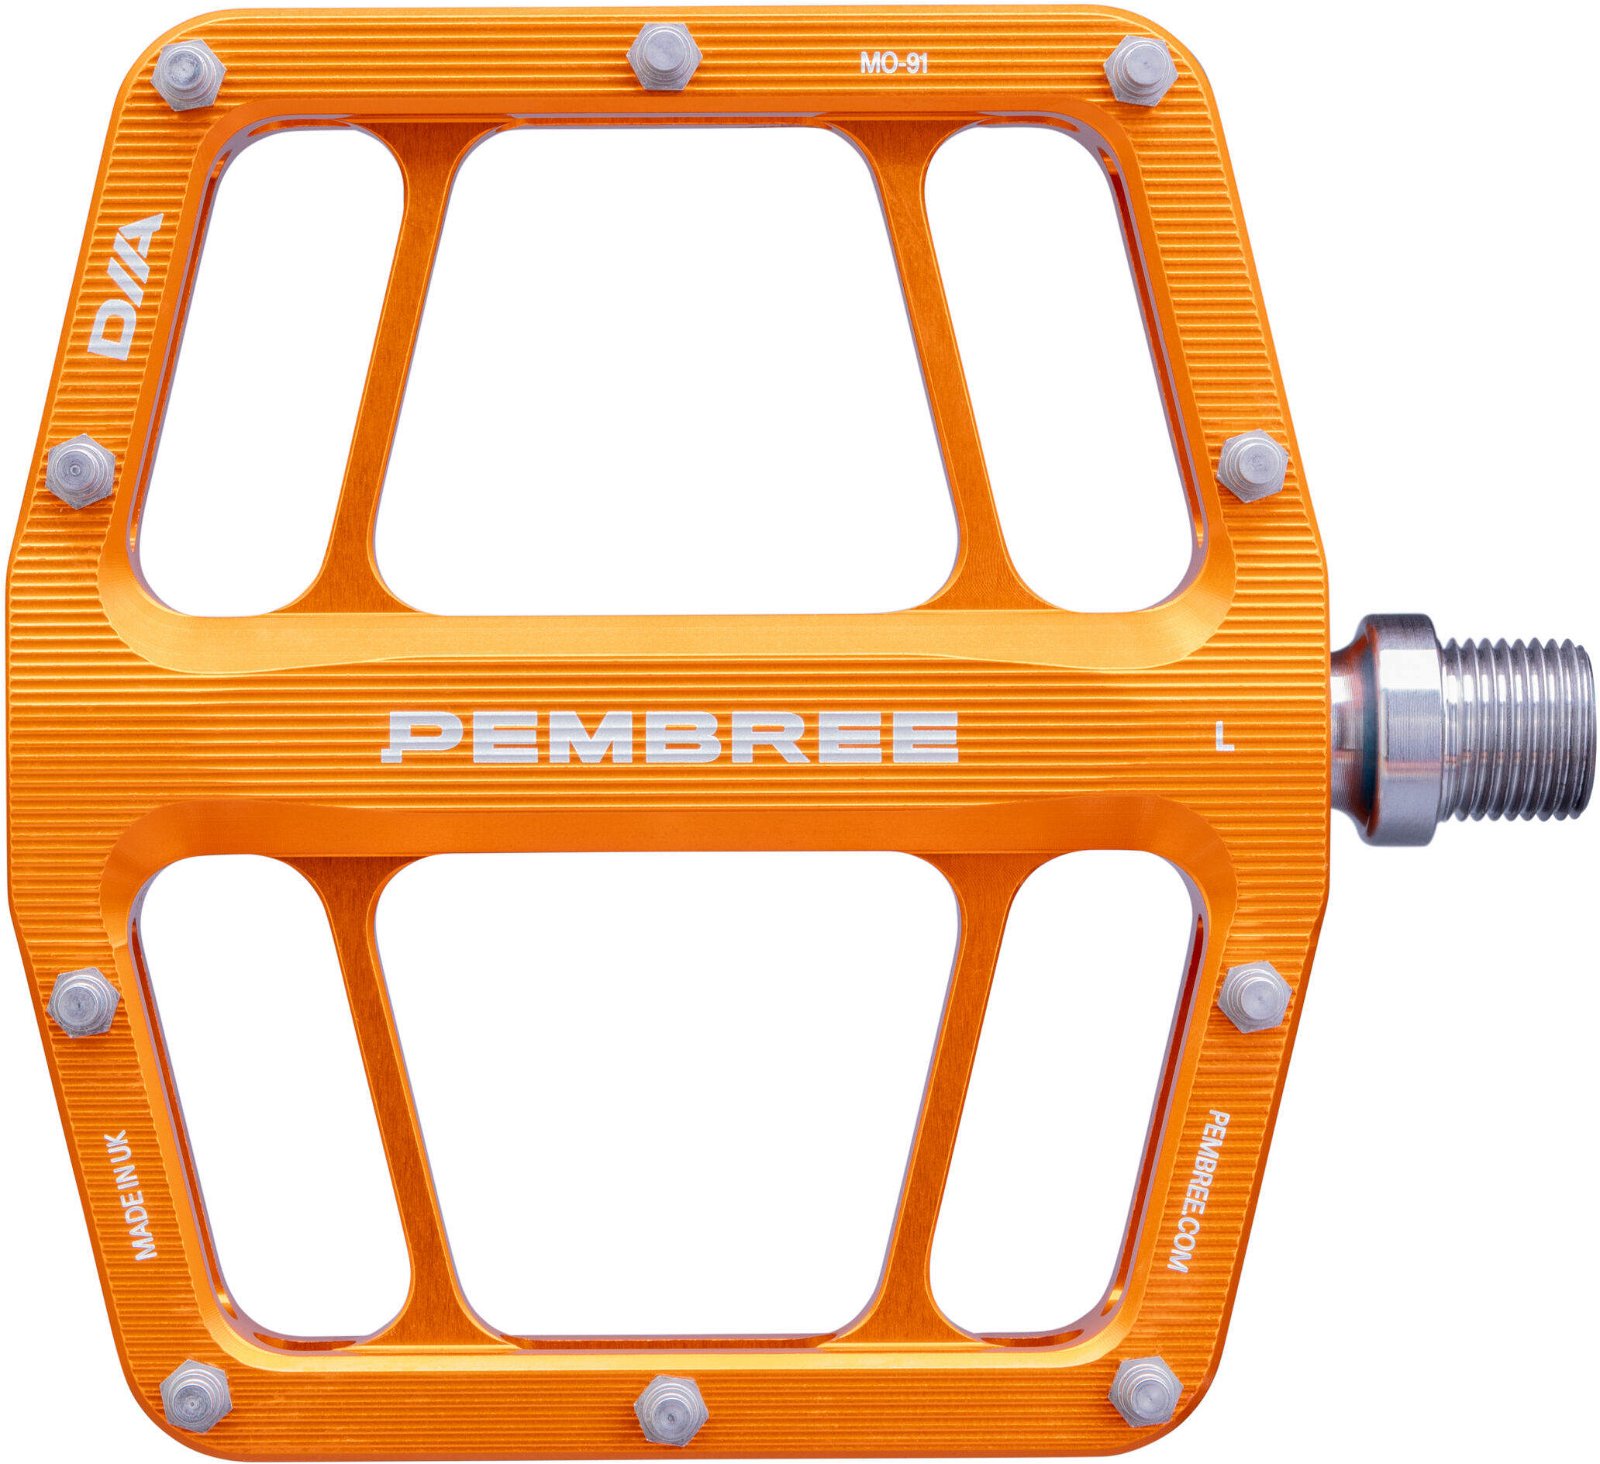 Pembree D2A Flat Pedal